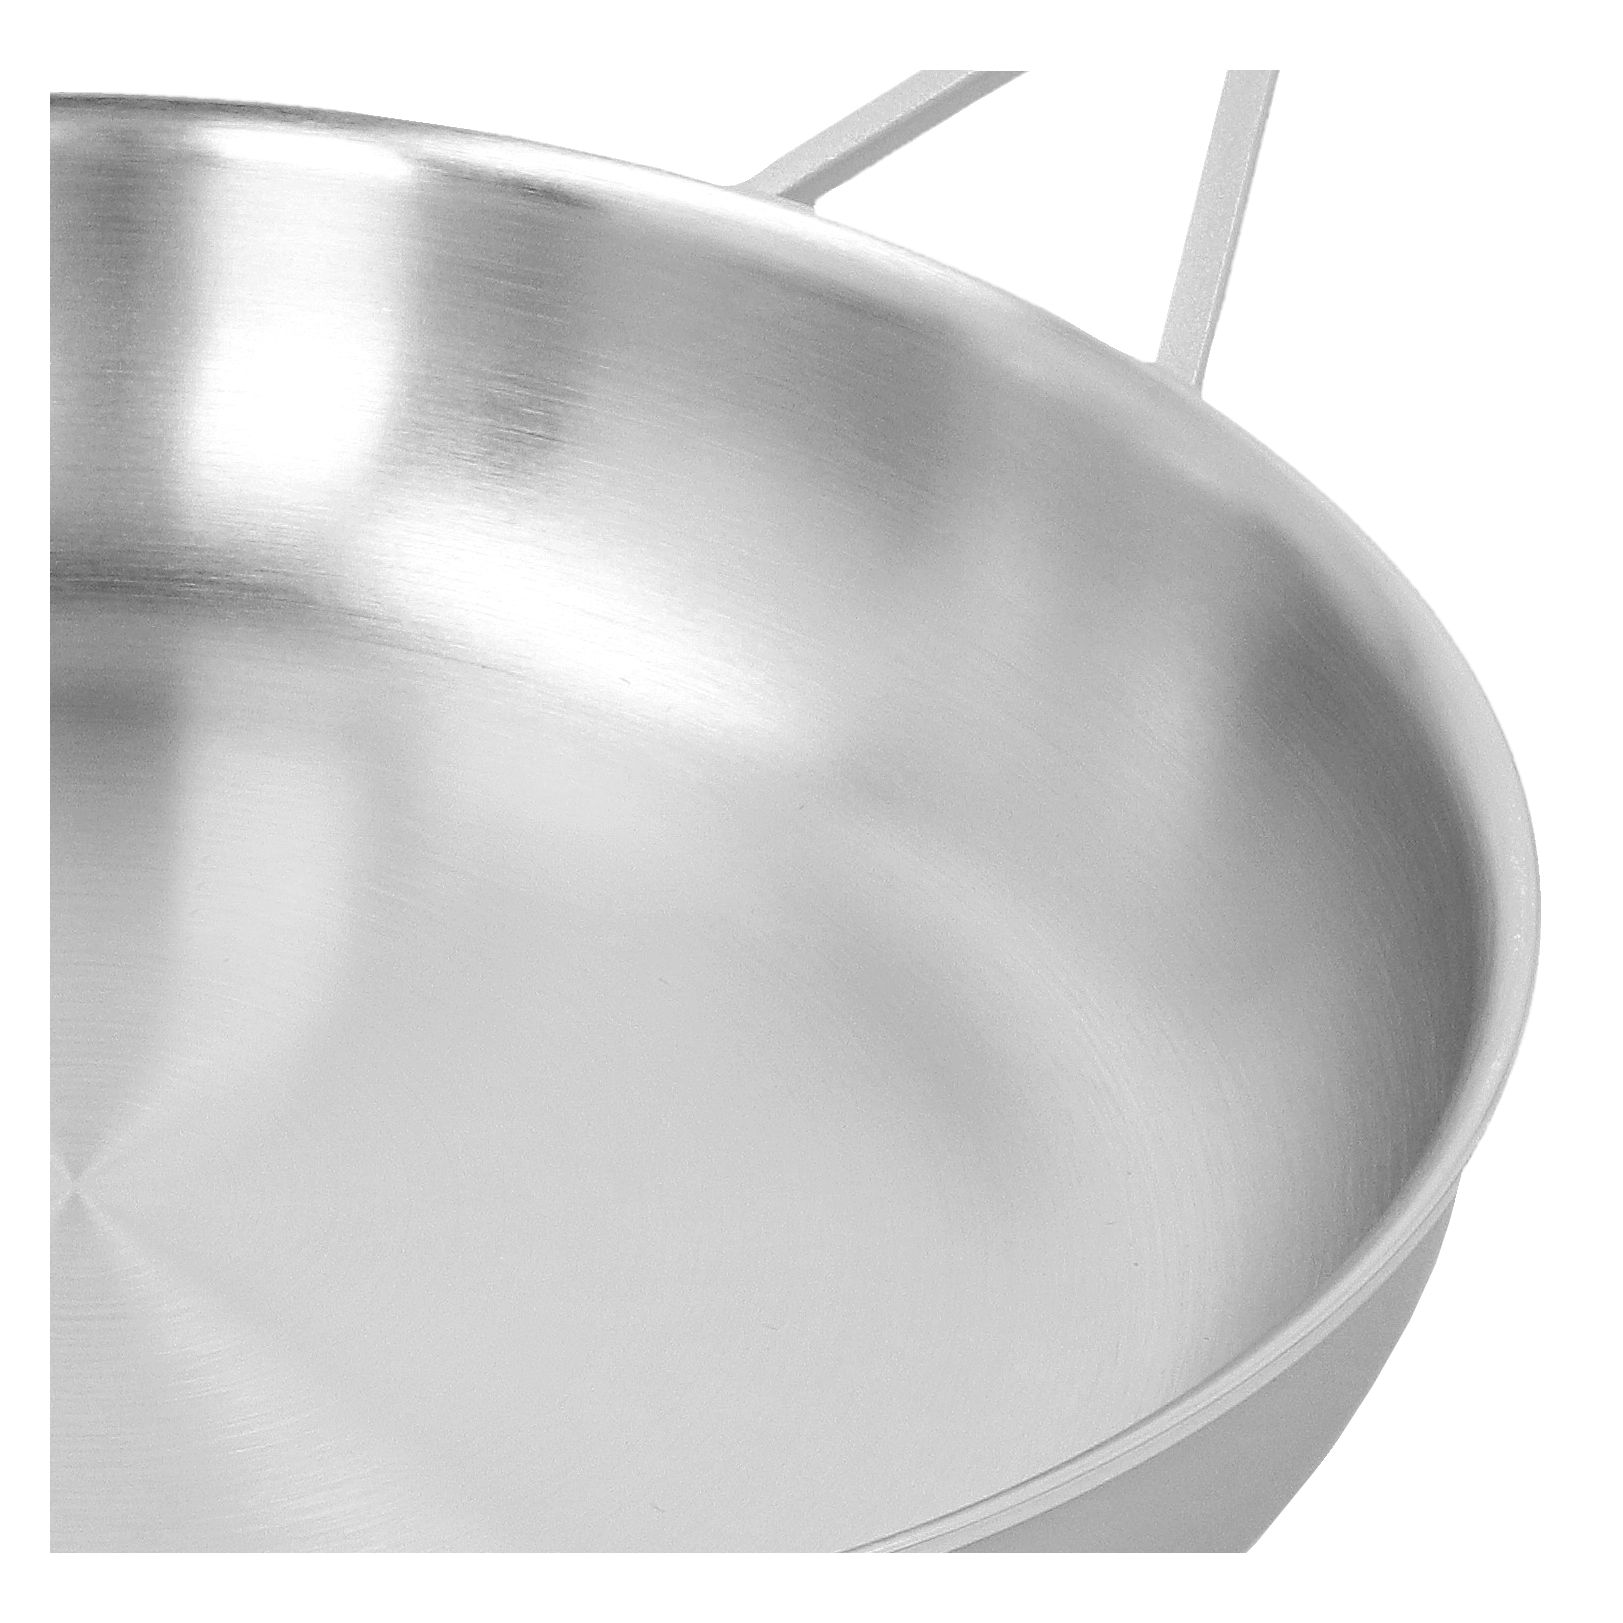 Demeyere Essential 5 12.5-Inch, 18/10 Stainless Steel, Frying Pan